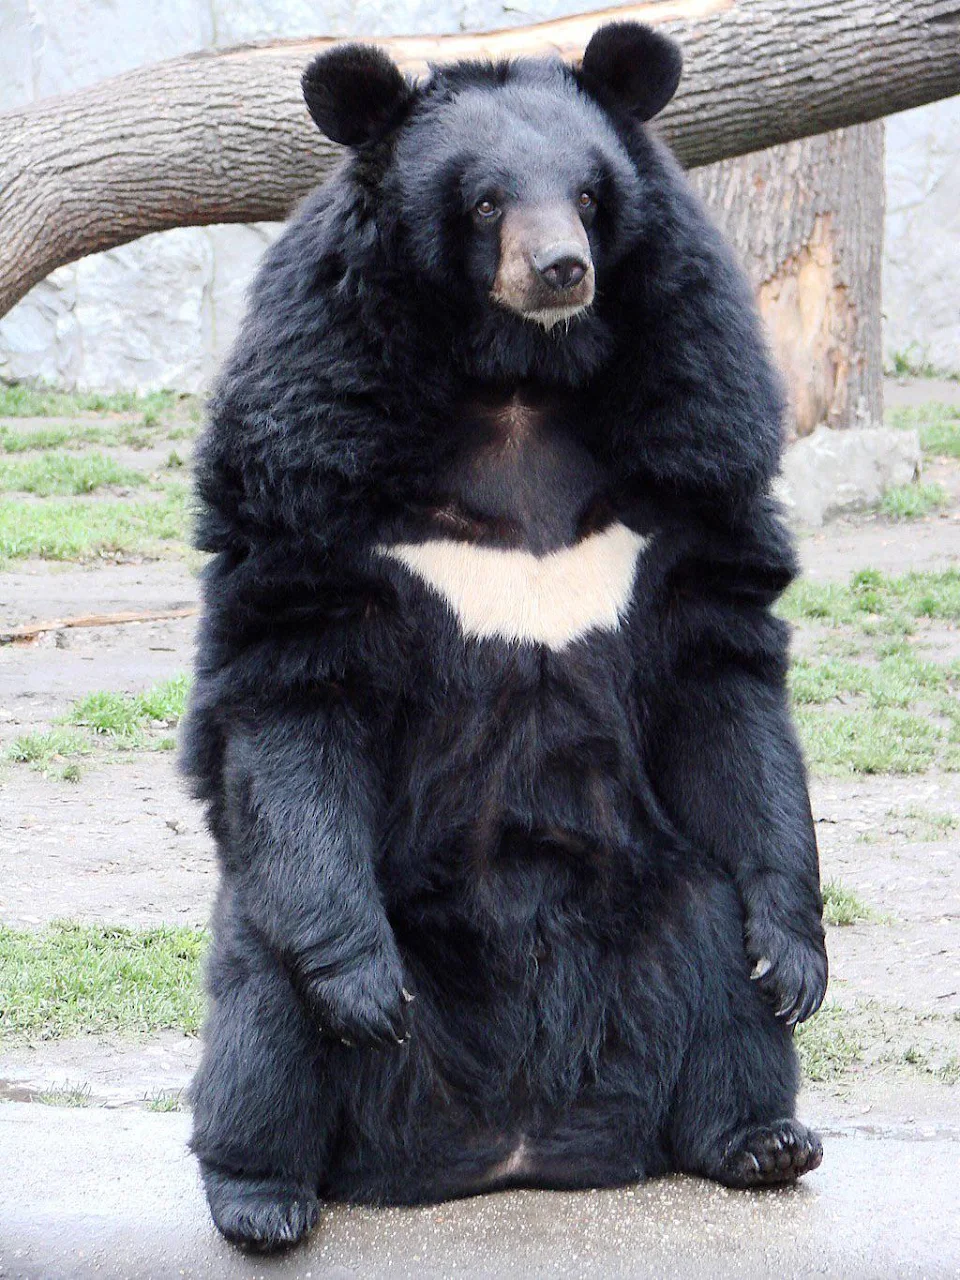 PsBattle: This Asian black bear